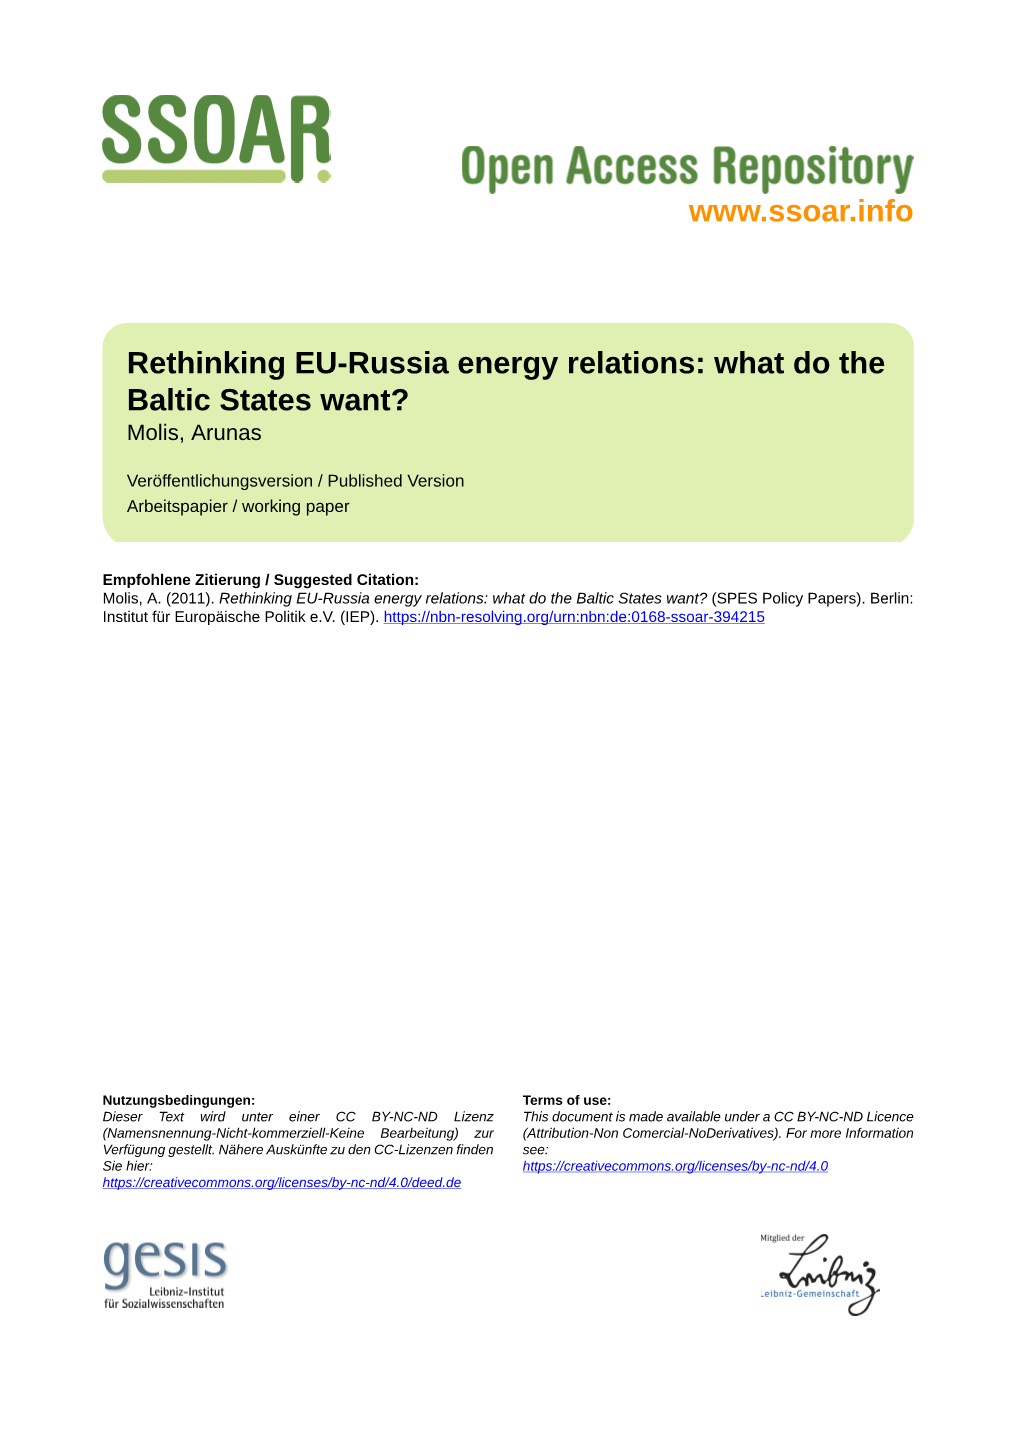 Rethinking EU-Russia Energy Relations: What Do the Baltic States Want? Molis, Arunas